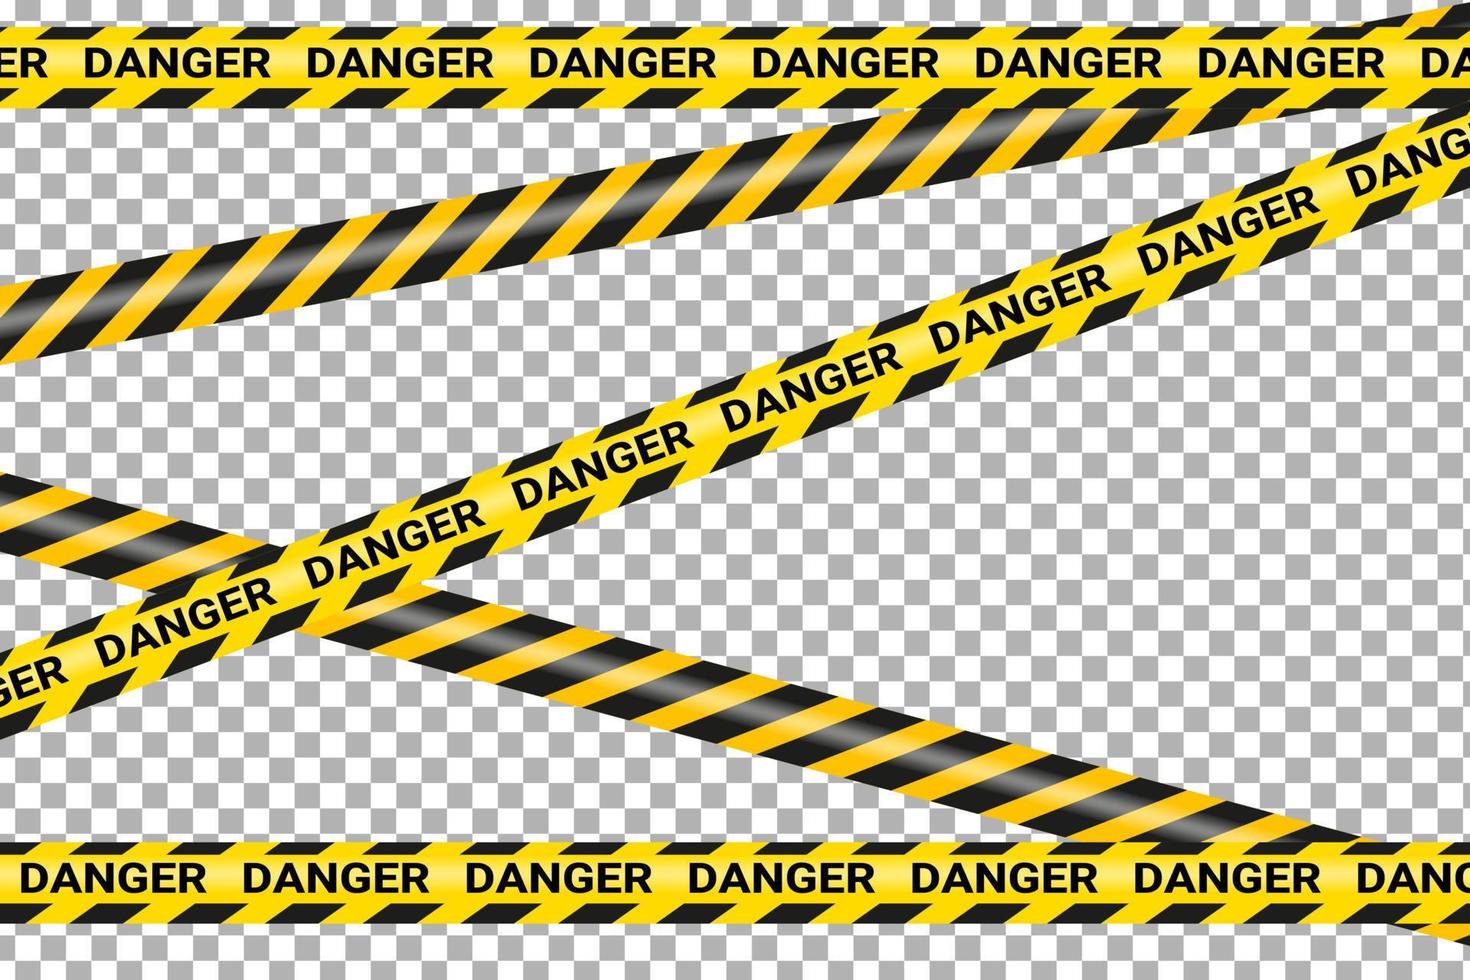 Warning label, warning tape, danger signs, danger tape, caution tape, under construction tape design vector